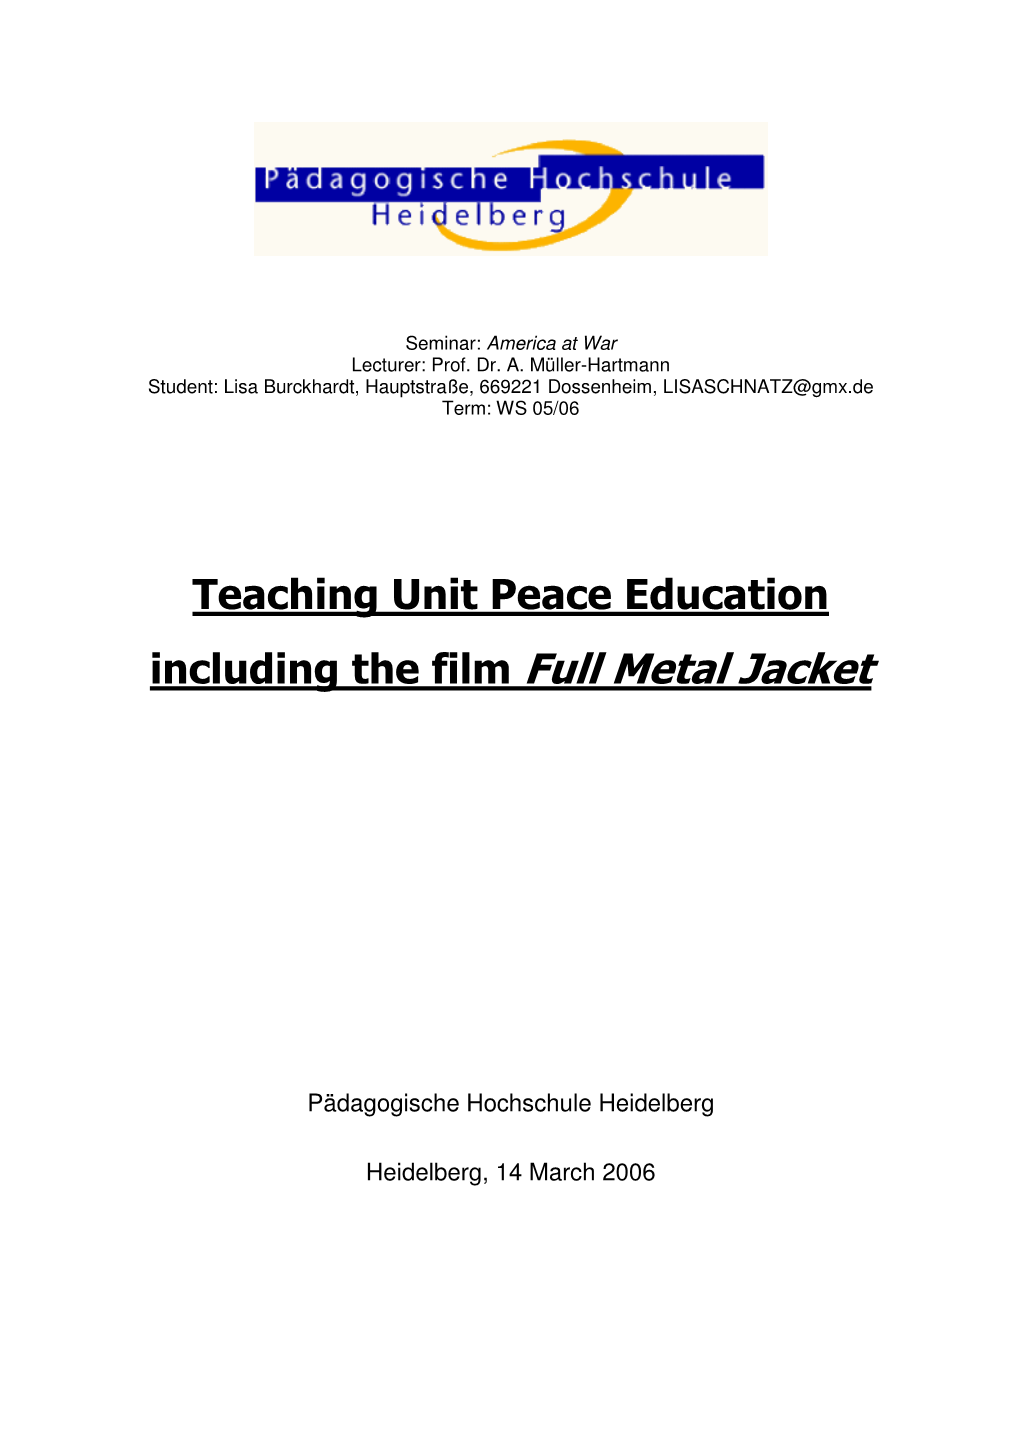 Teaching Unit Peace Education Including the Film Full Metal Jacket